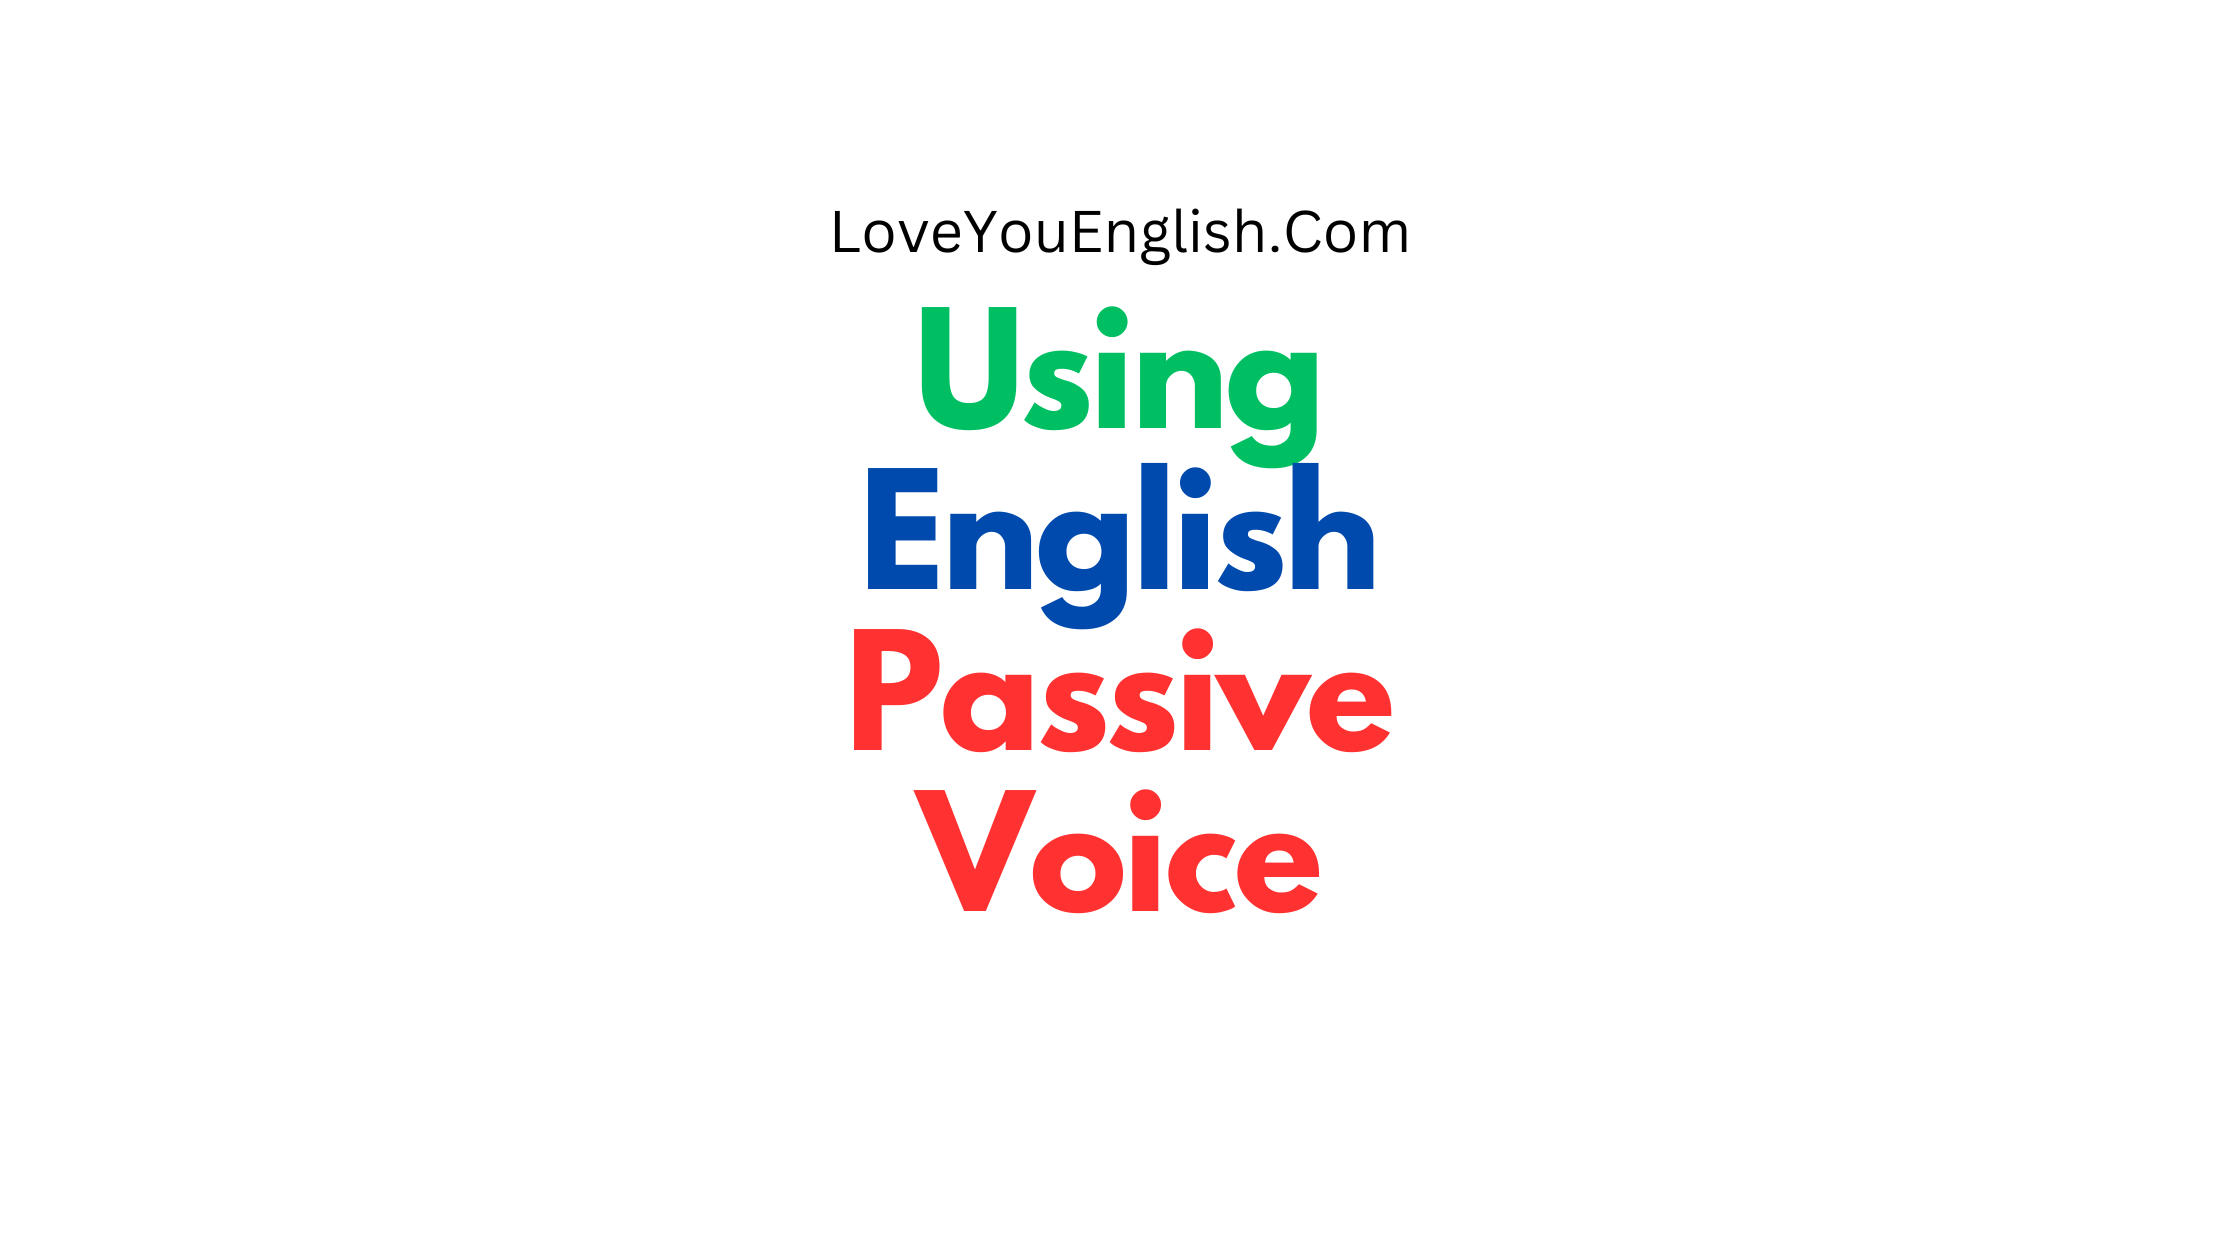 Use the English Passive Voice